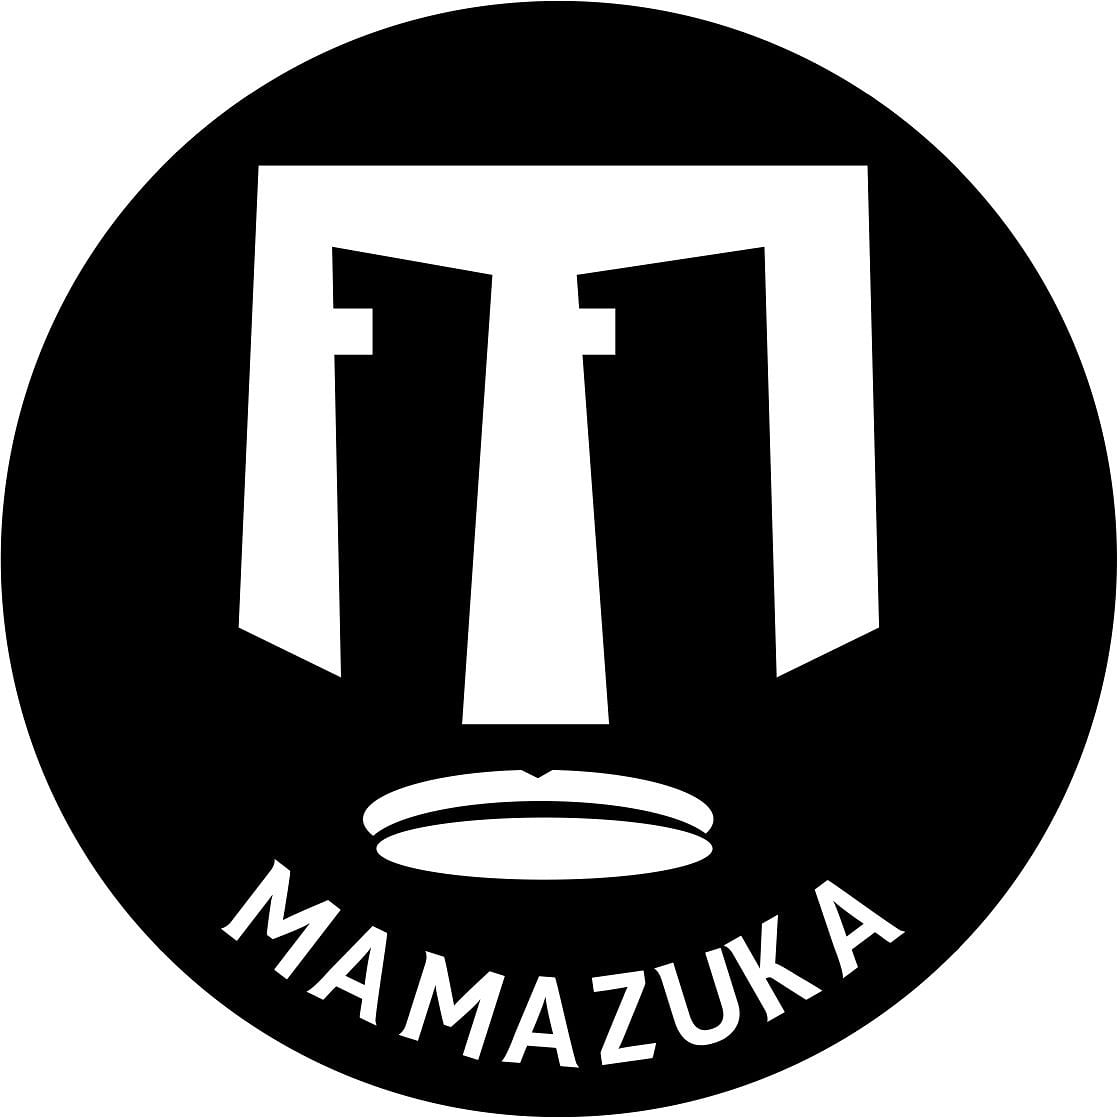 En este momento estás viendo Mamazuka